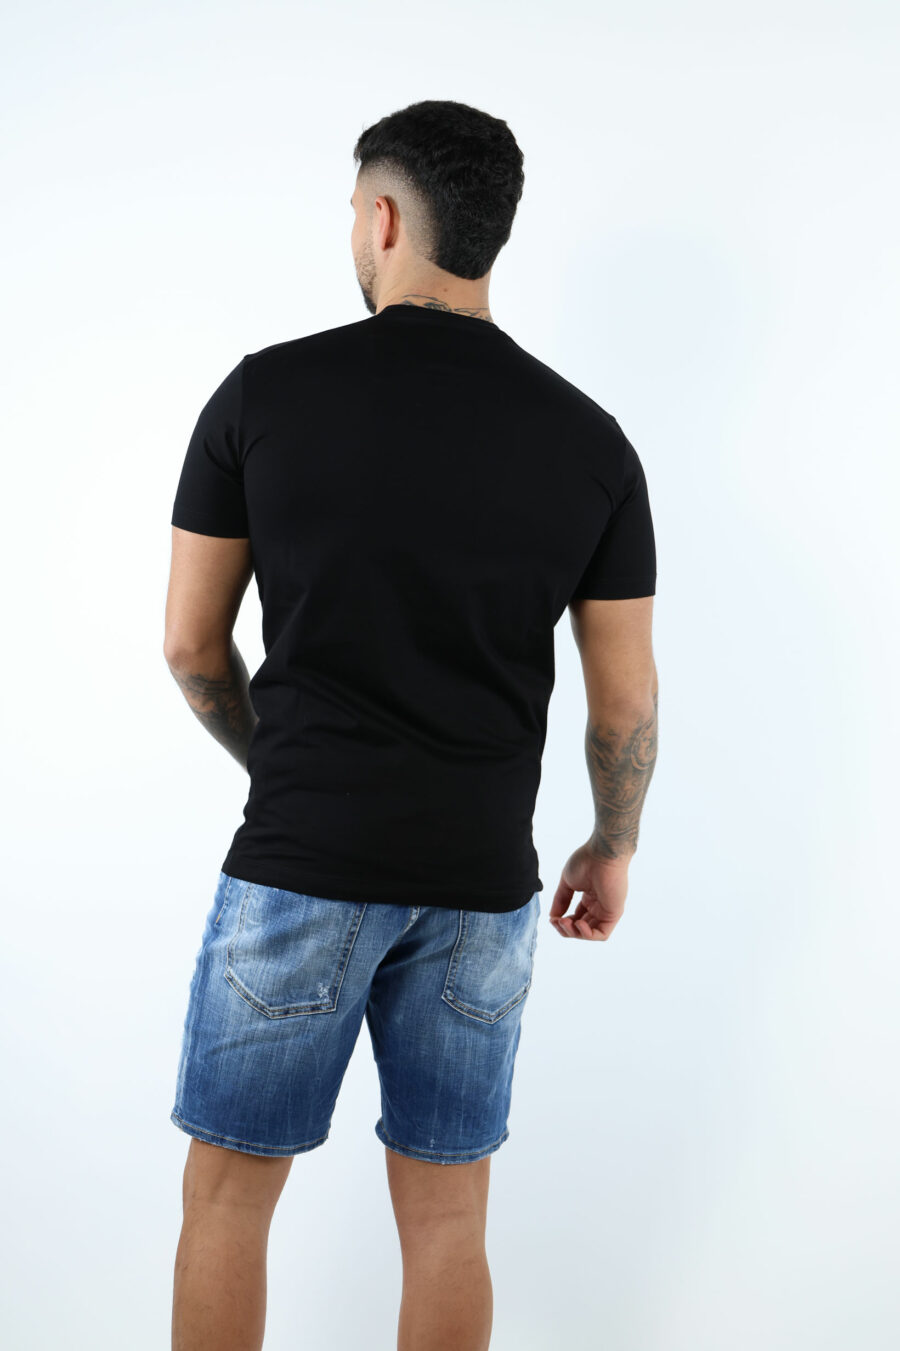 Camiseta negra con maxilogo perro baloncesto - 106895